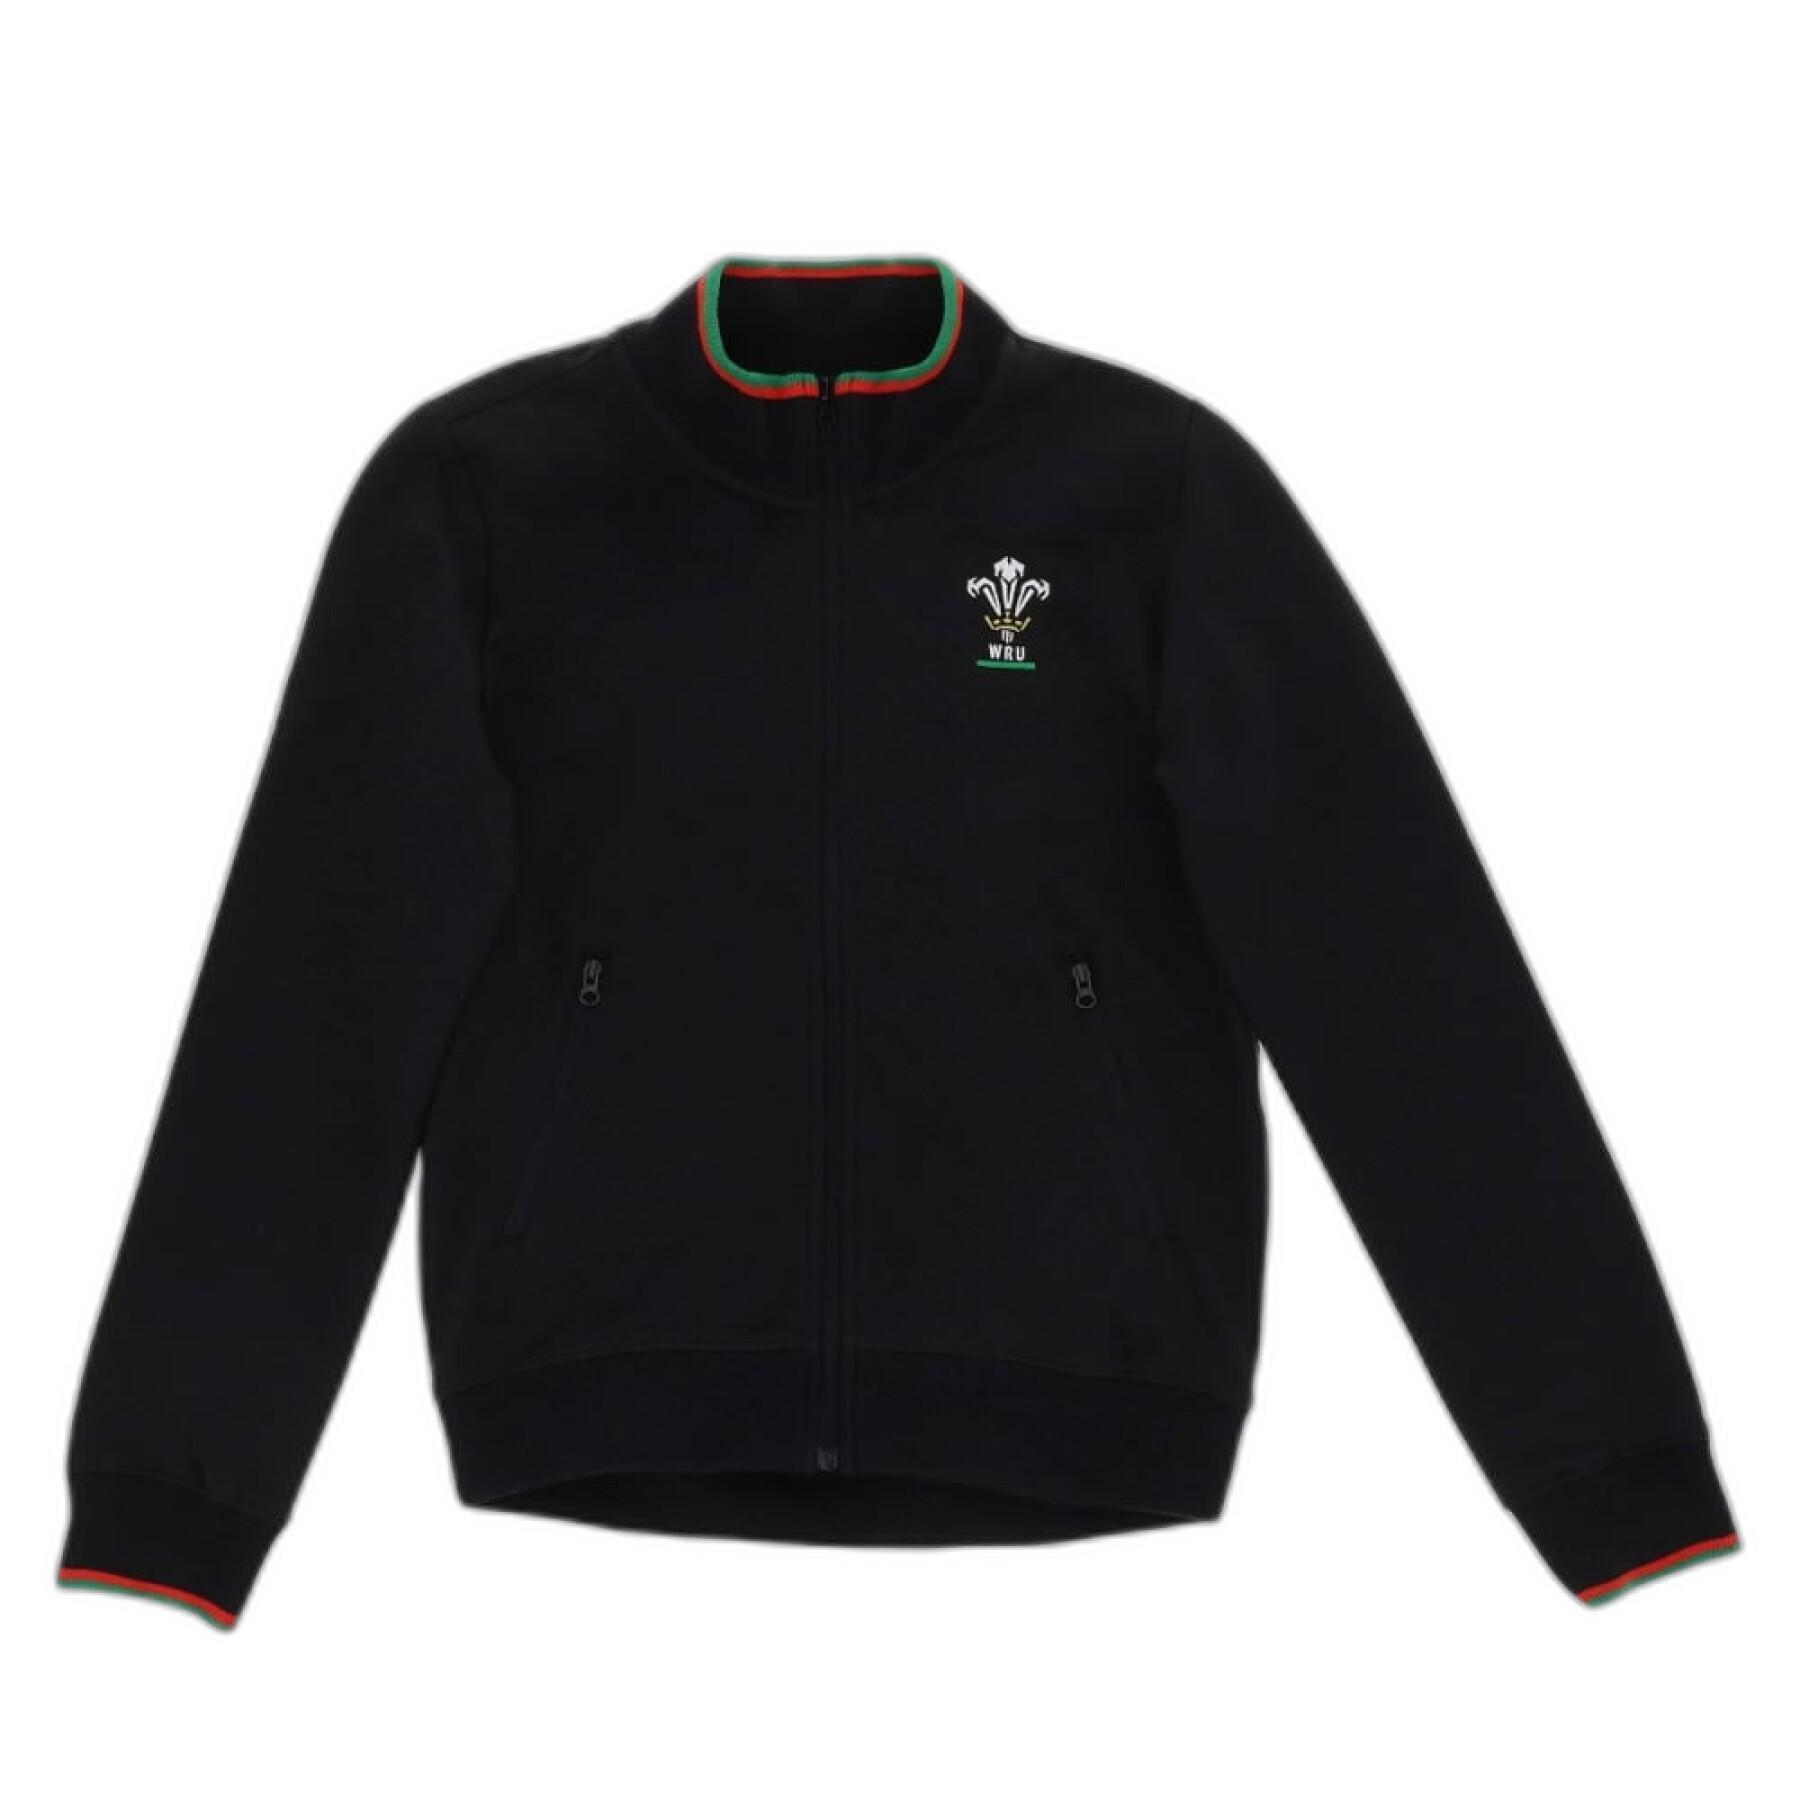 Full zip sweatshirt for kids Pays de Galles Rugby XV WRC Merch CA LF